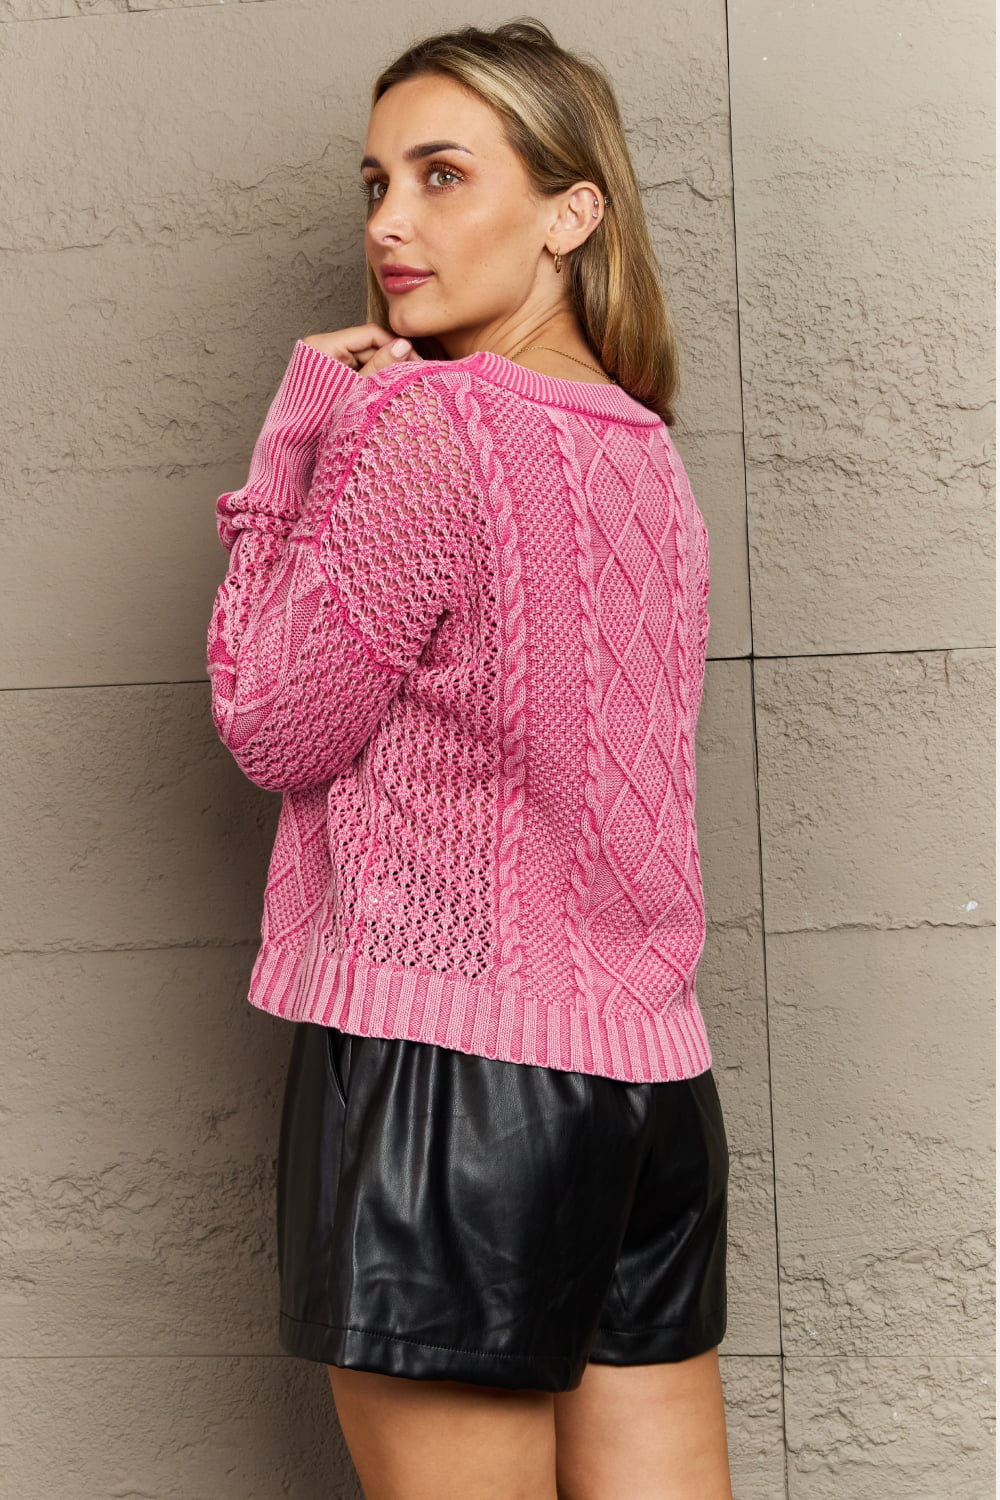 HEYSON Soft Focus Full Size Wash Cable Knit Cardigan in Fuchsia Trendsi